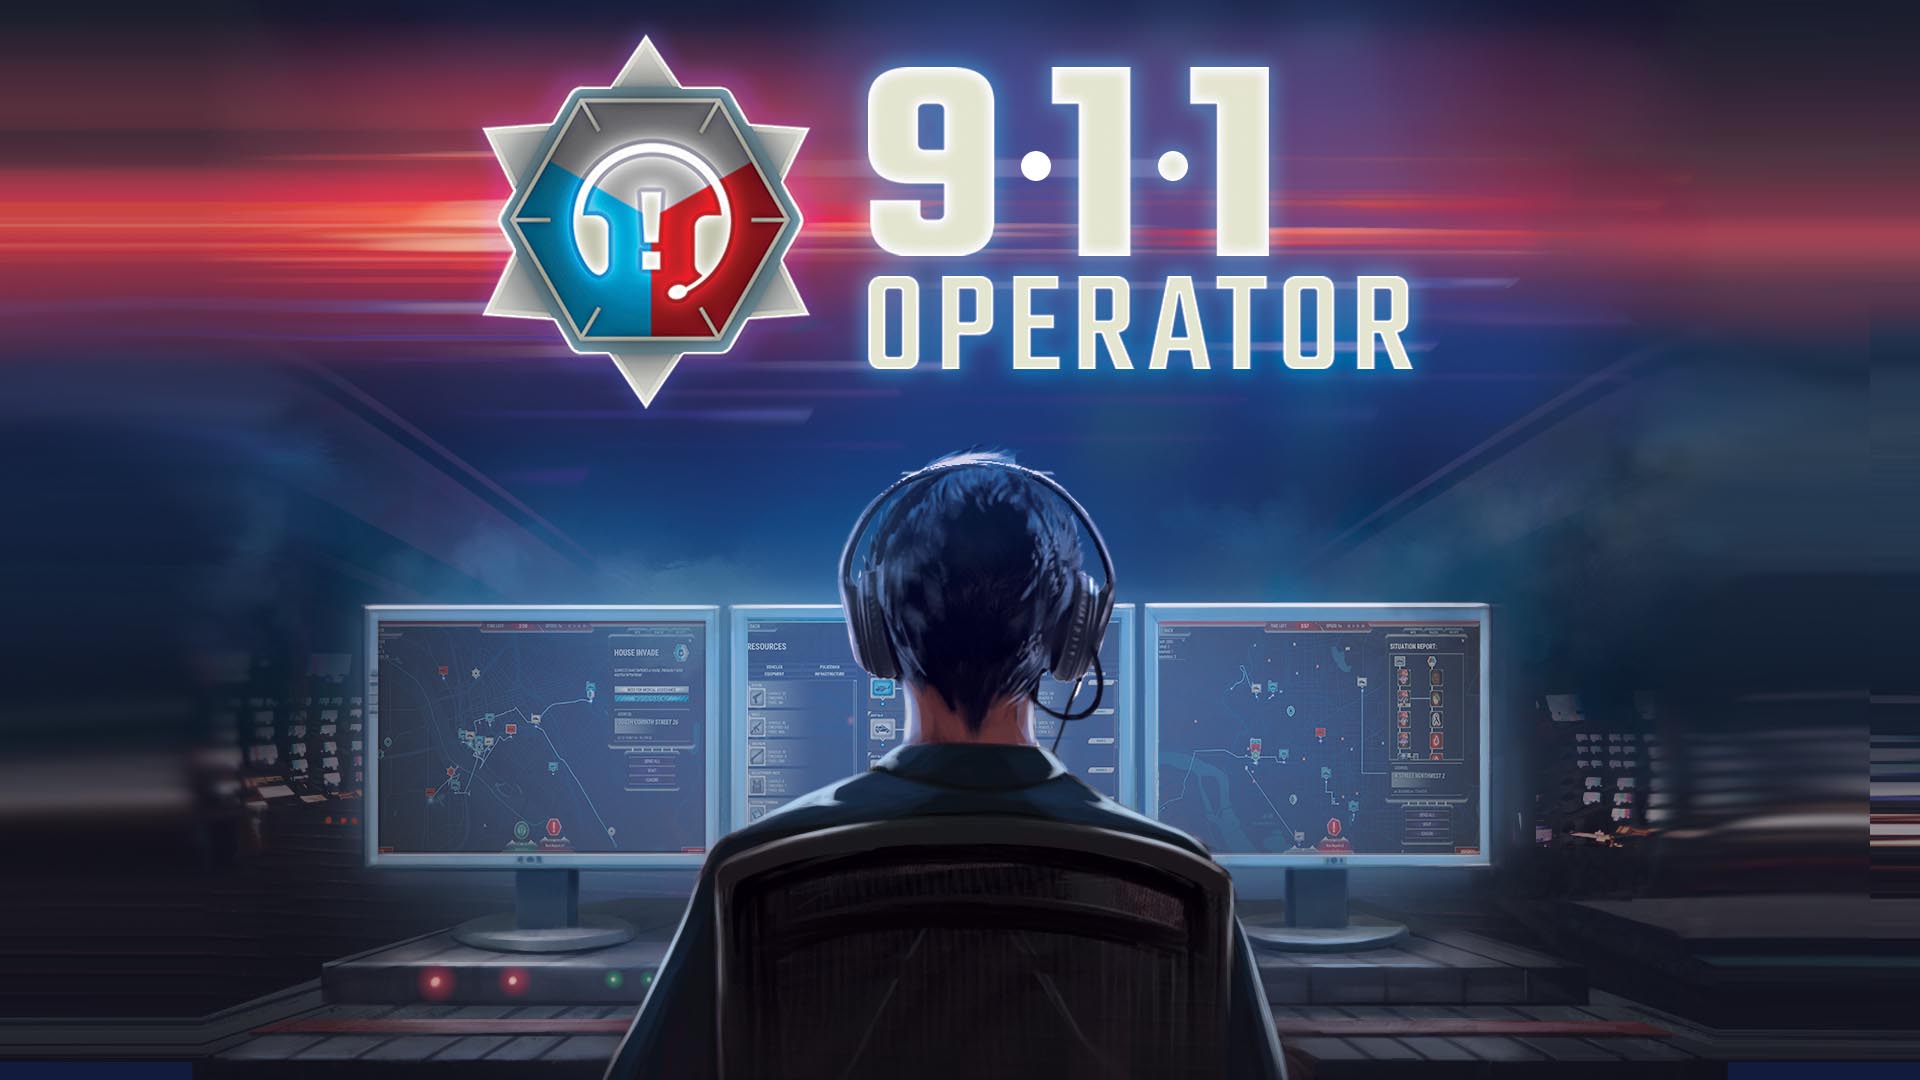 operator 911